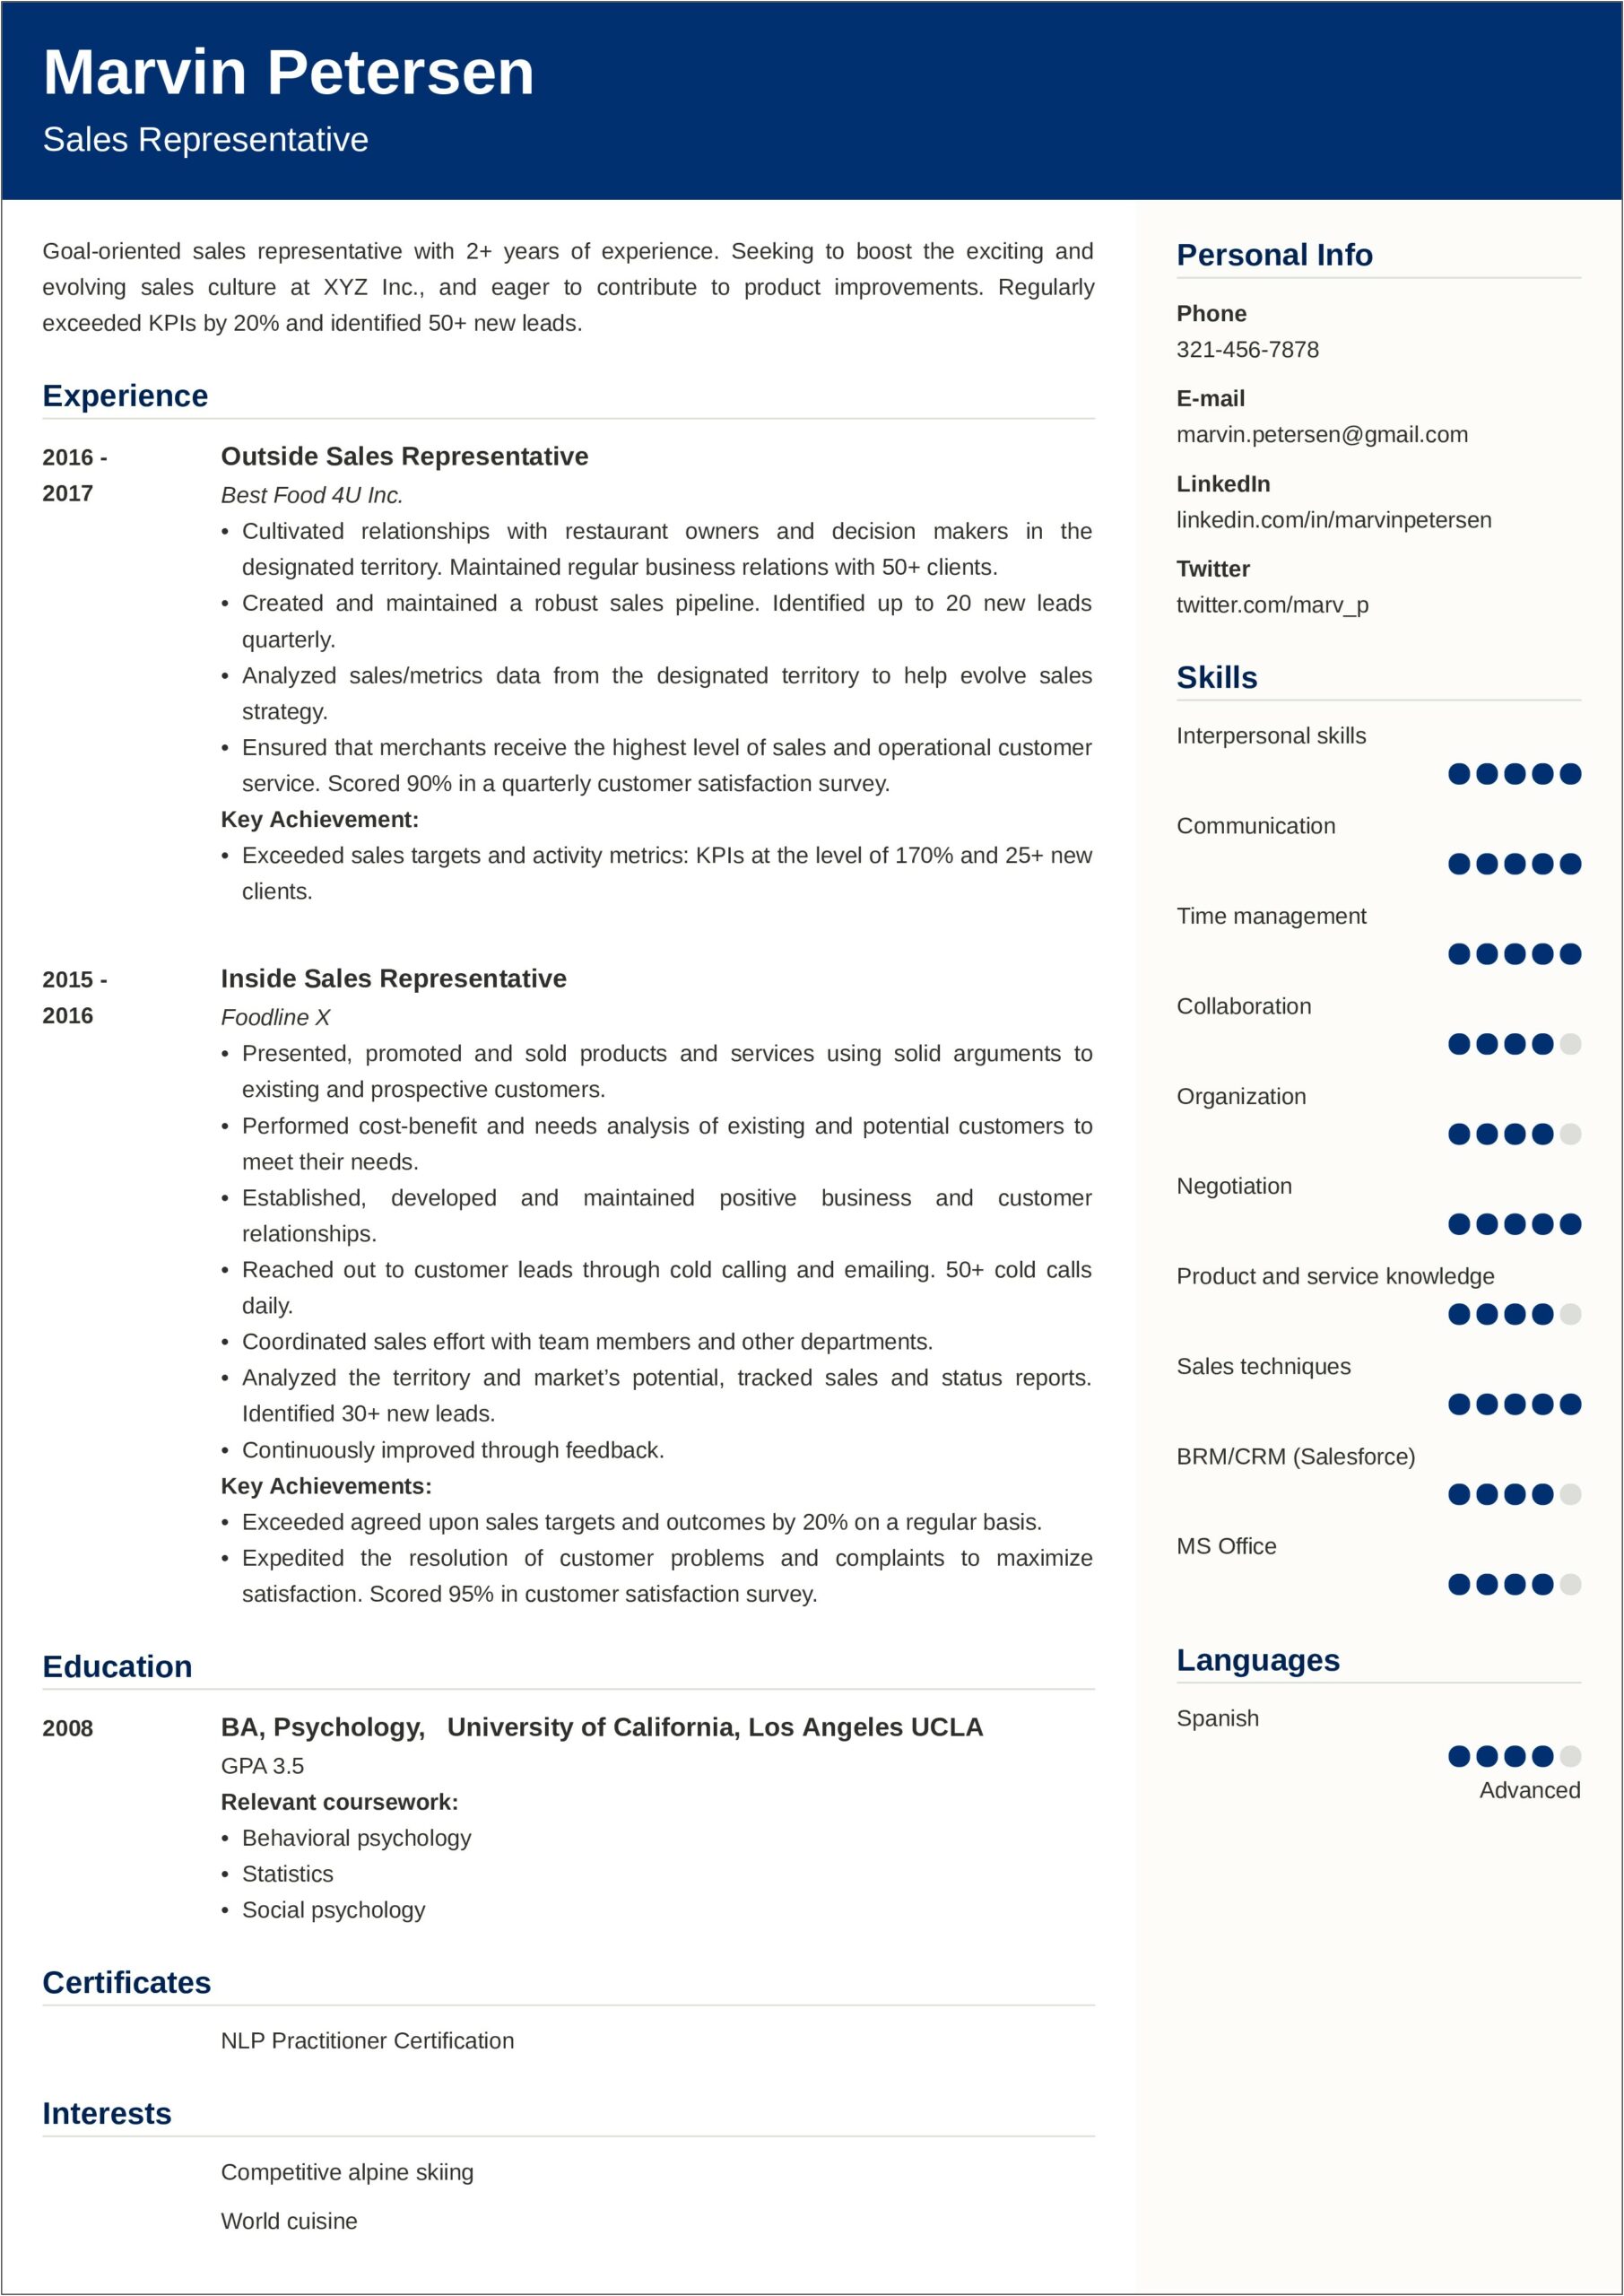 Resume Format In Word For Medical Representative